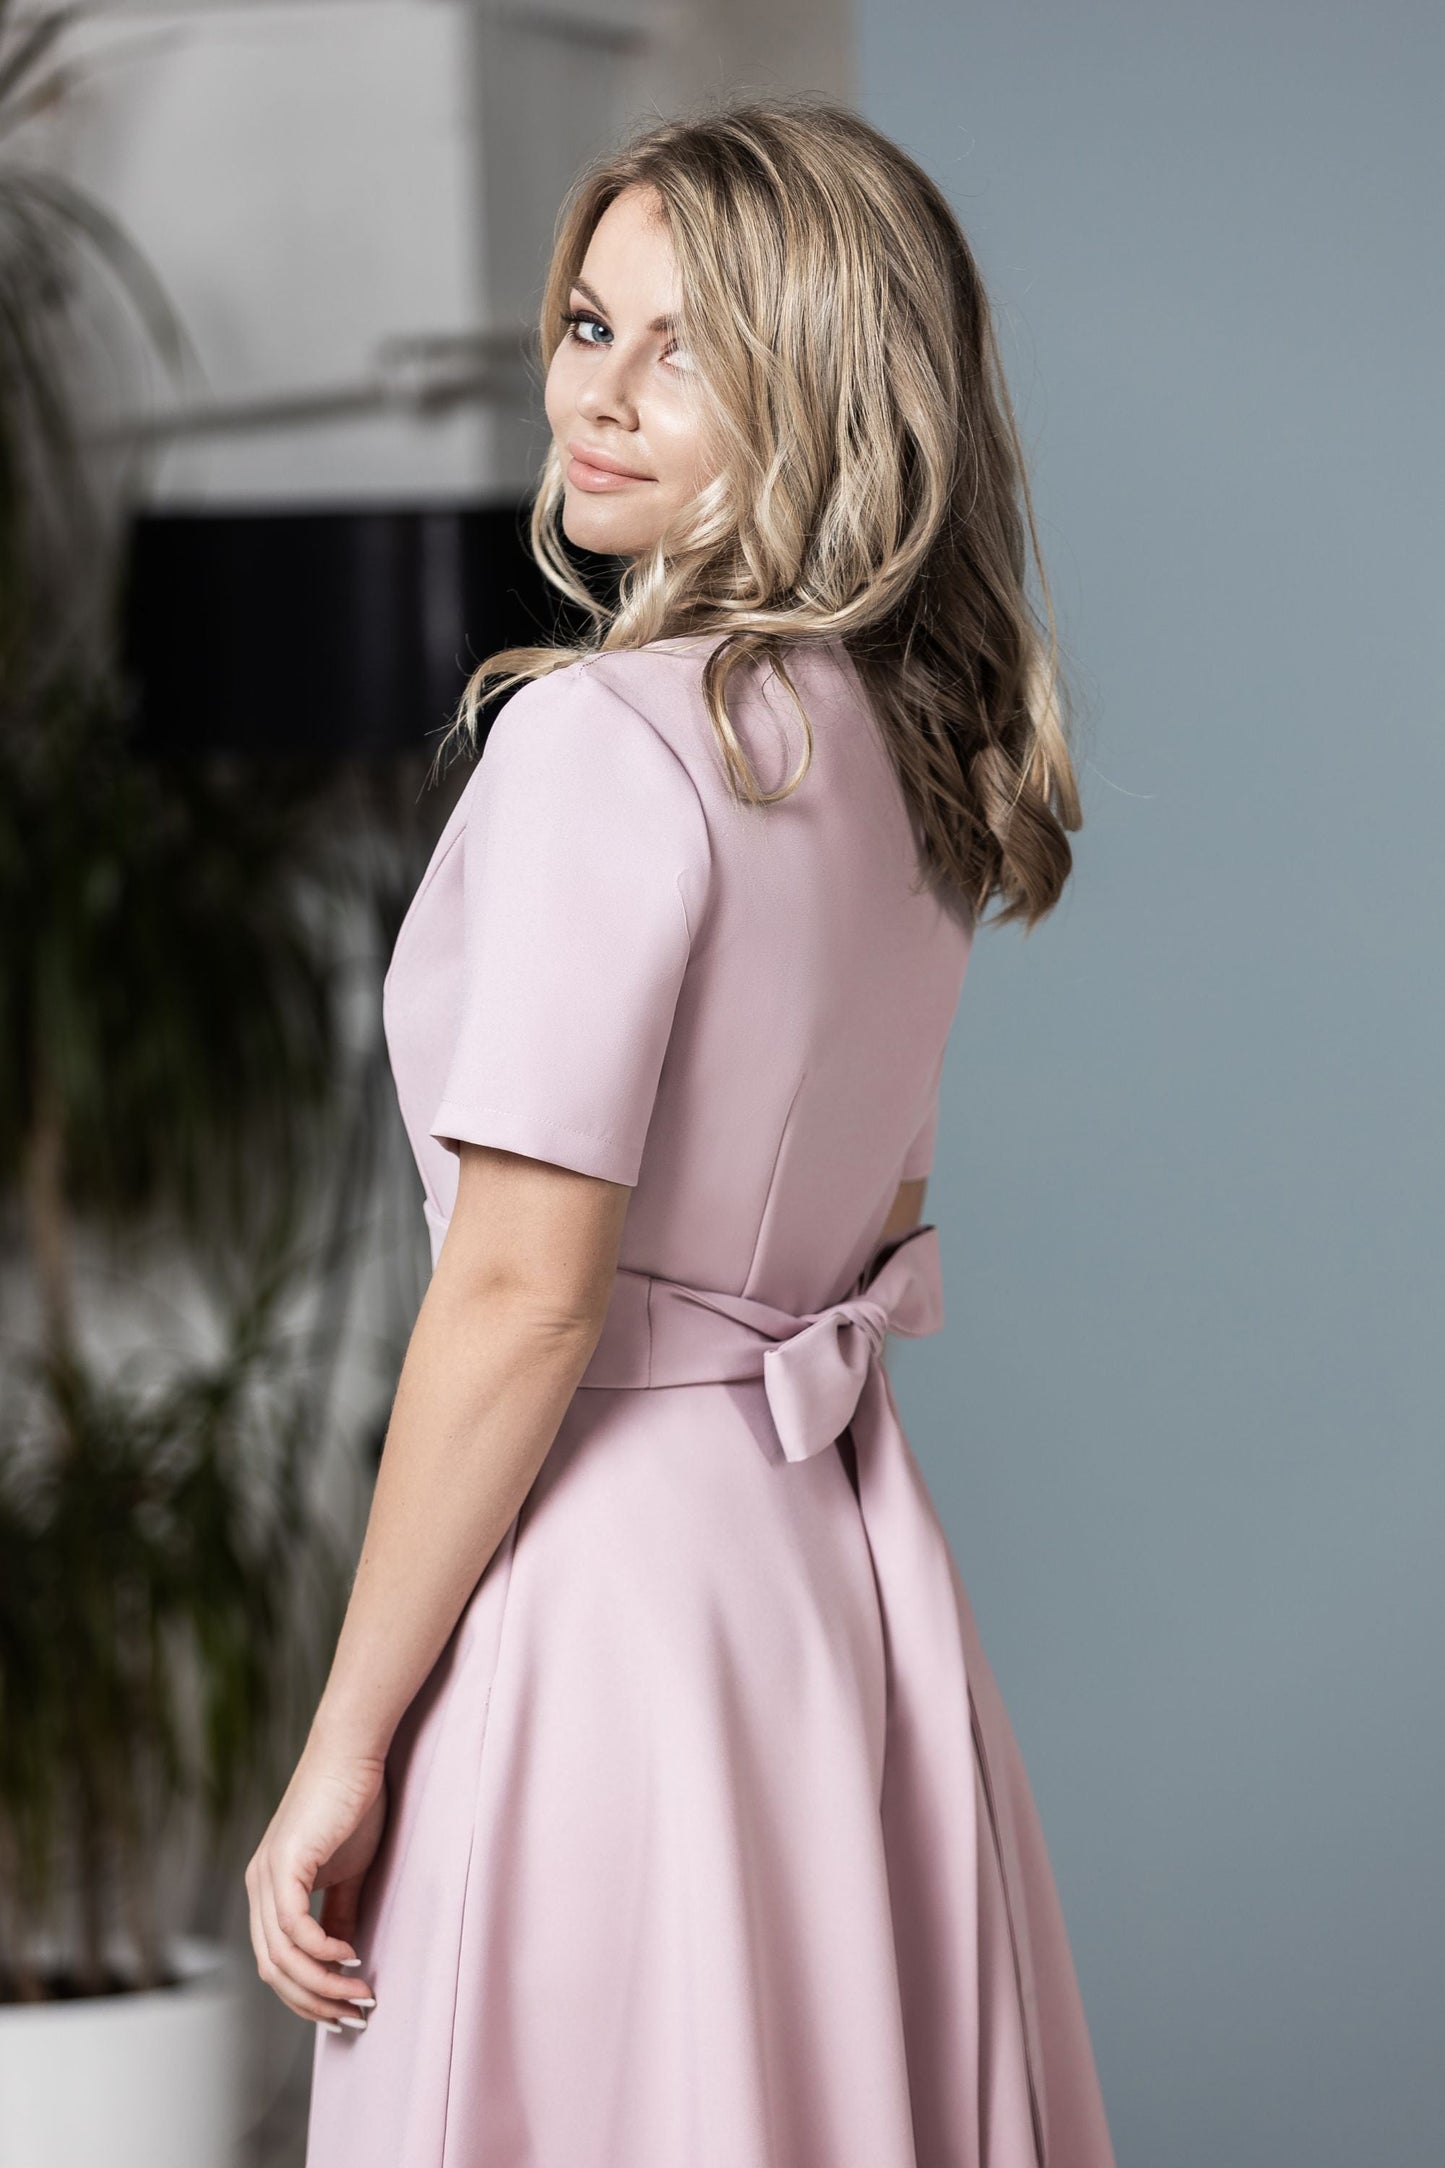 Light pink classic dress with circle skirt